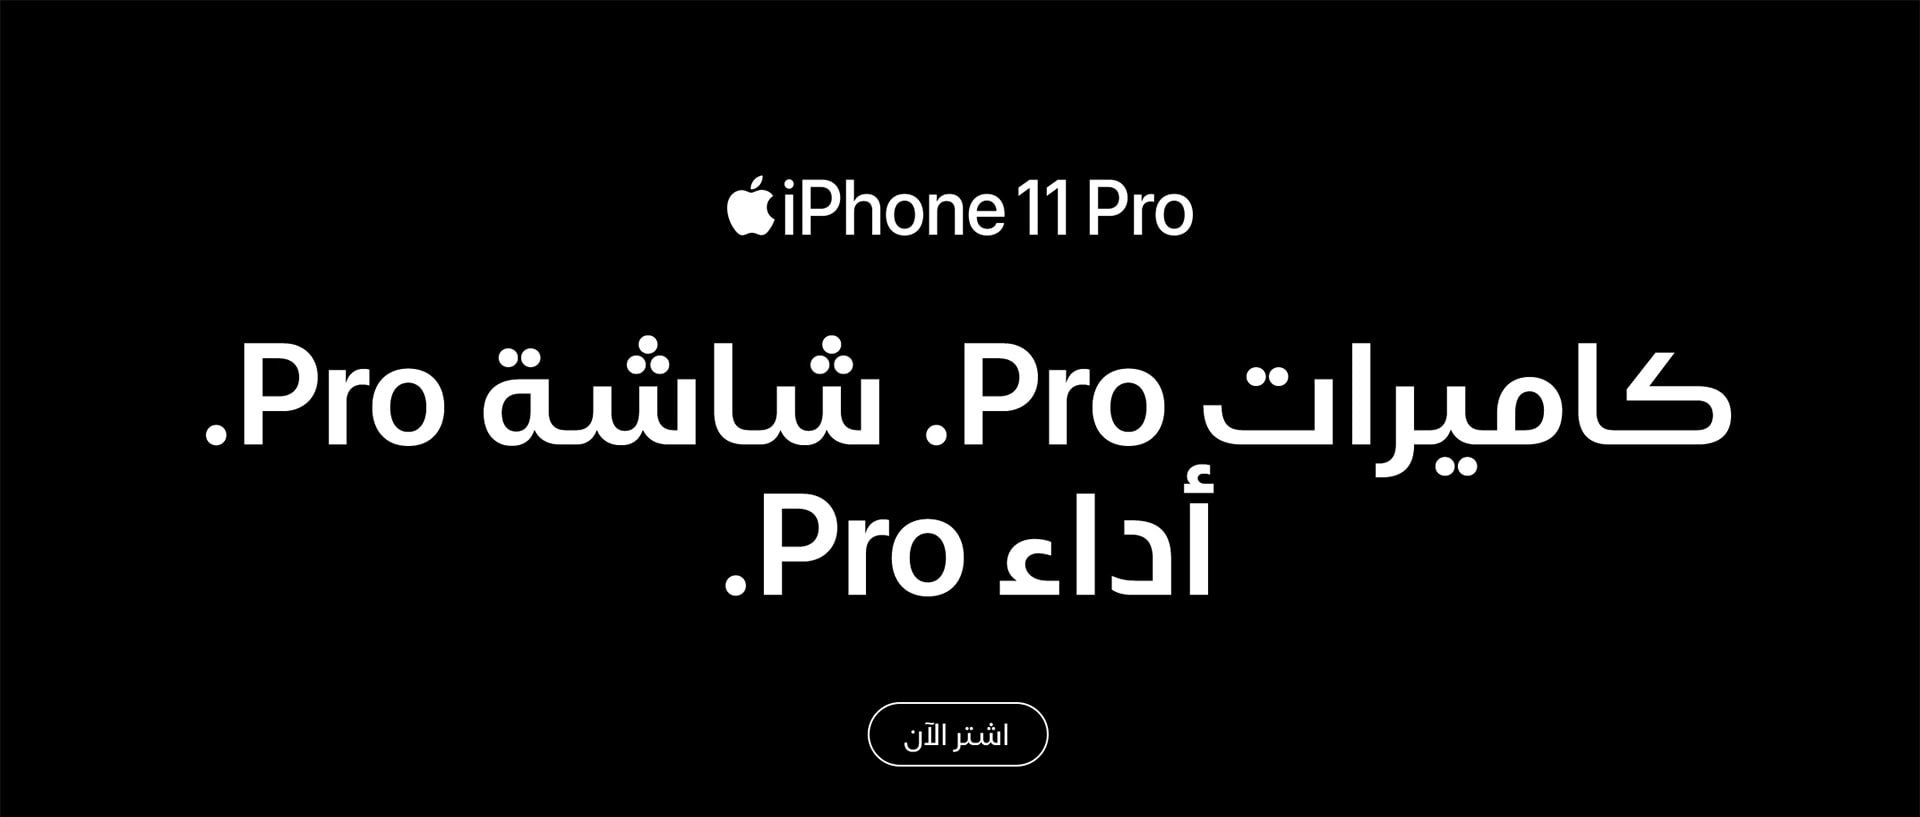 apple-iphone11-pro-max-price-etisalat-uae-overview-1-ar